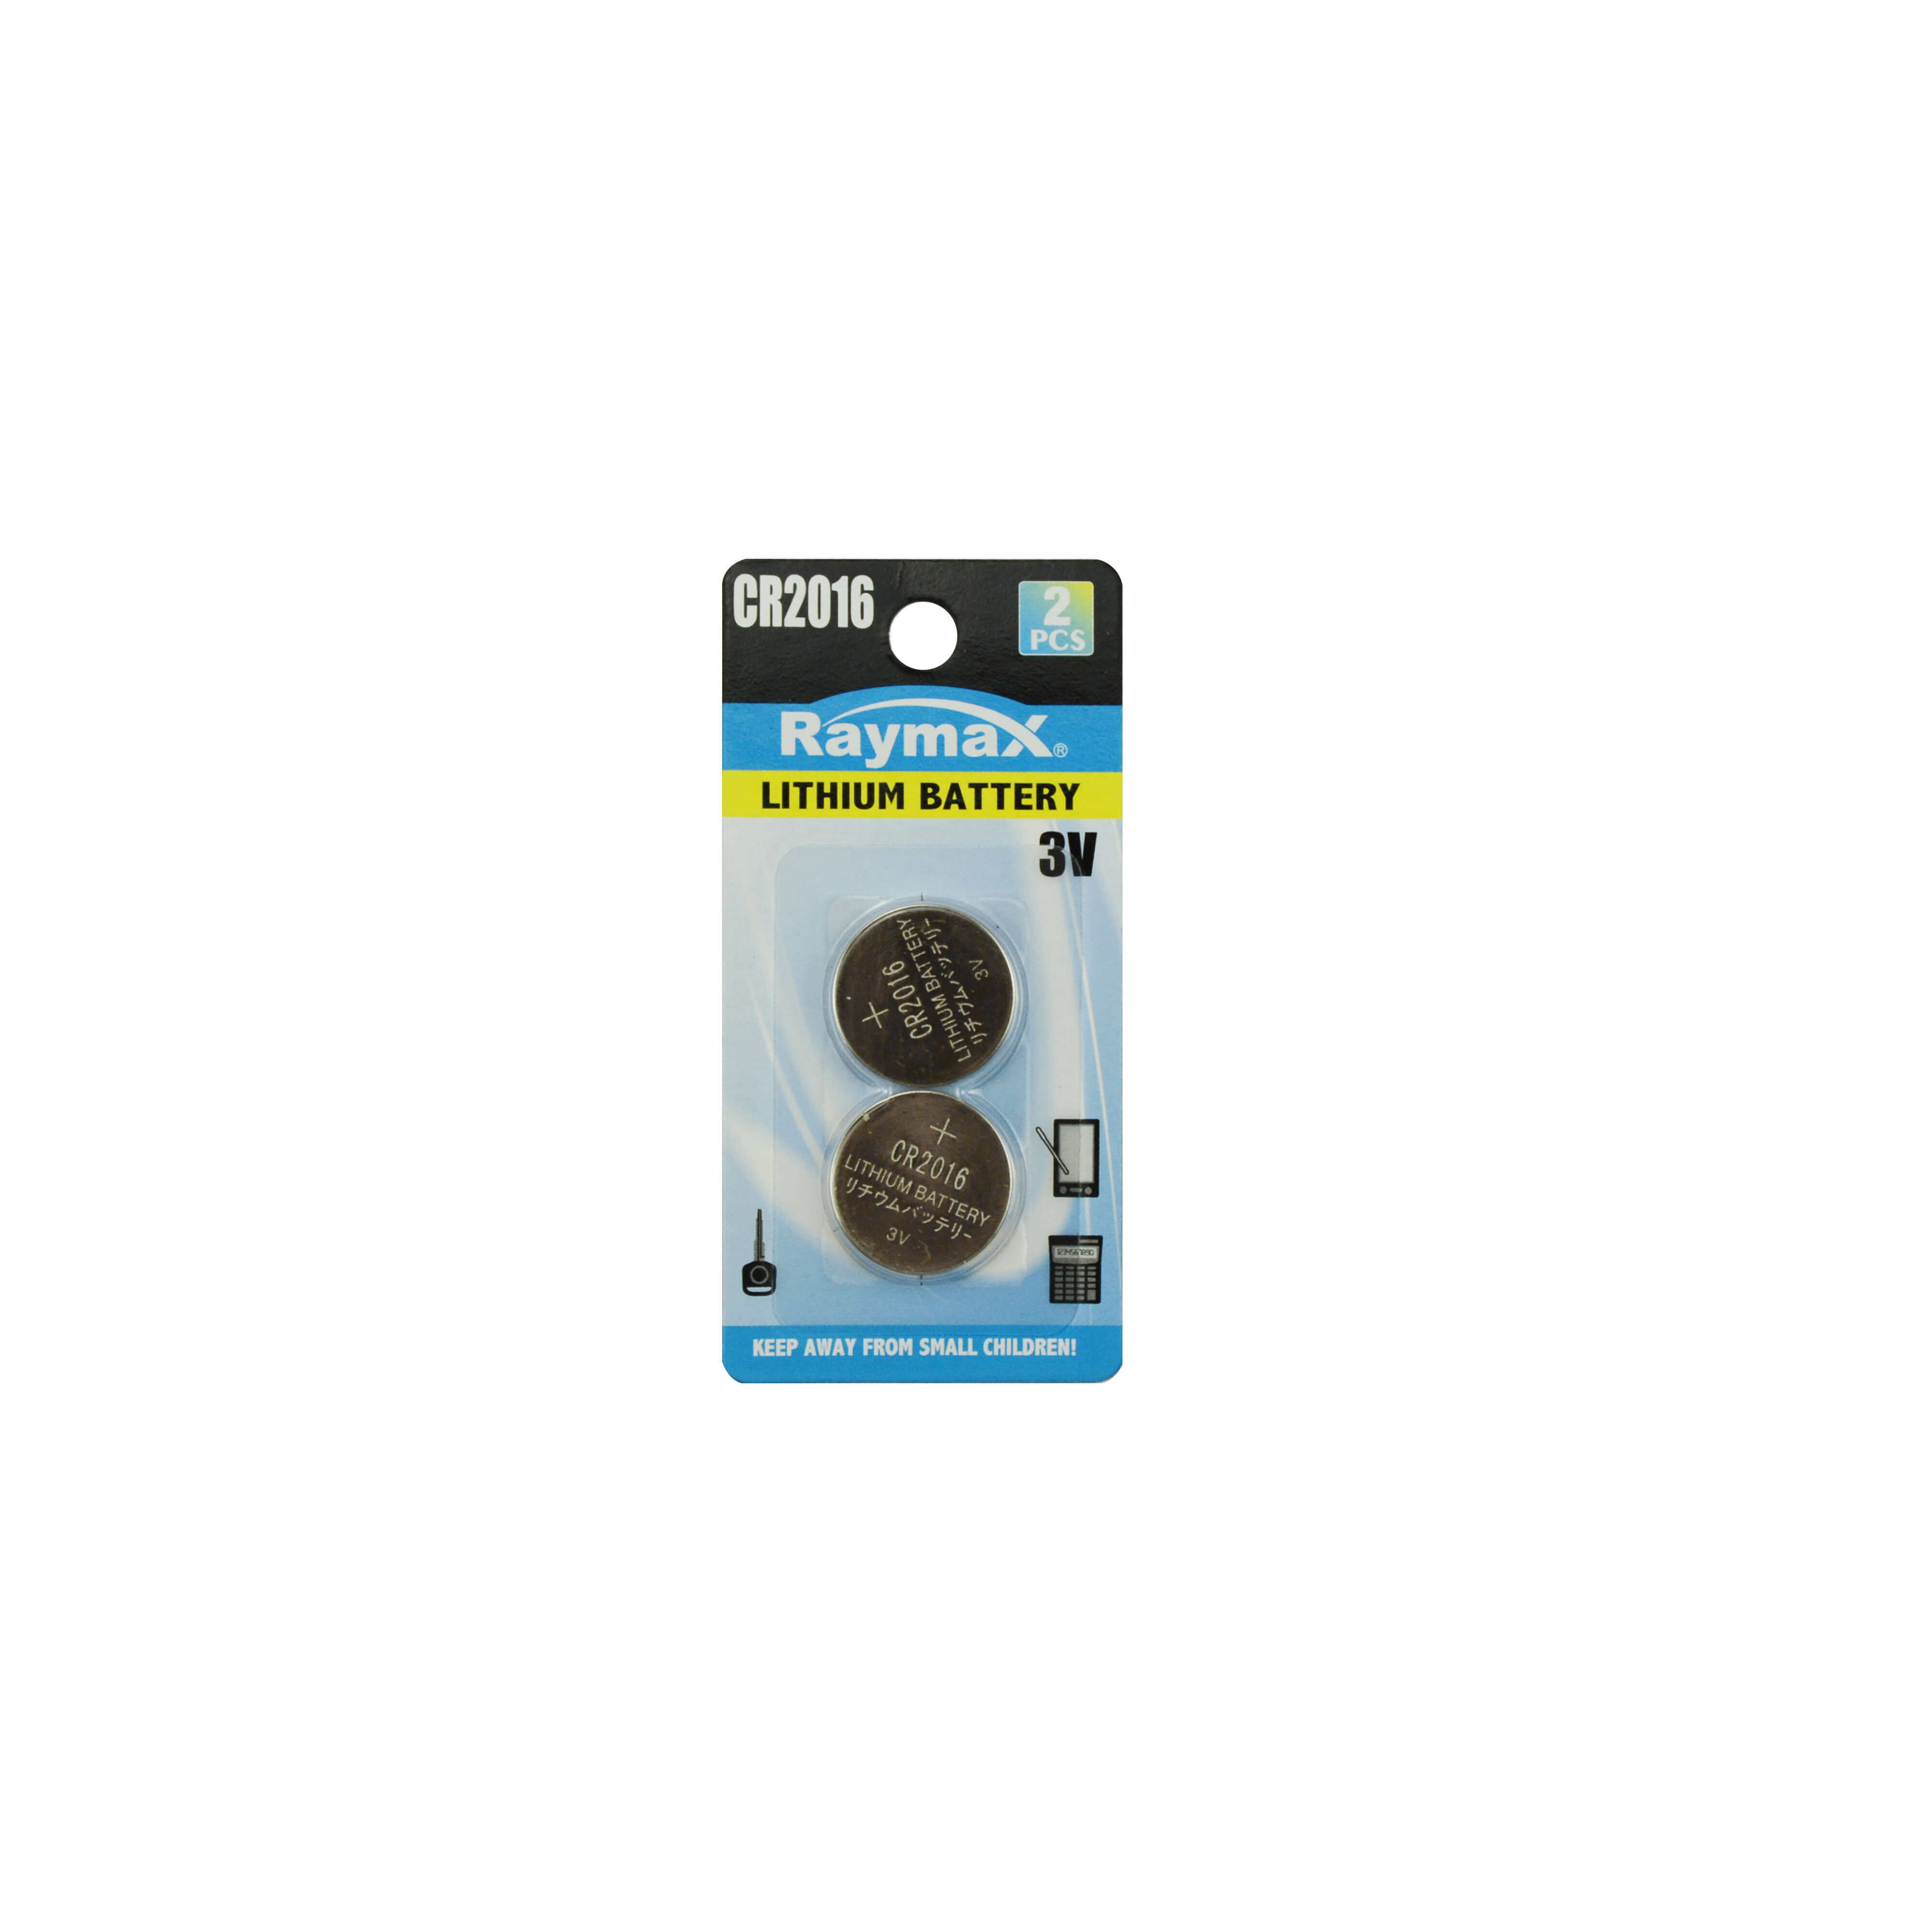 Lithium coin battery 3v CR2016 2pcs pack